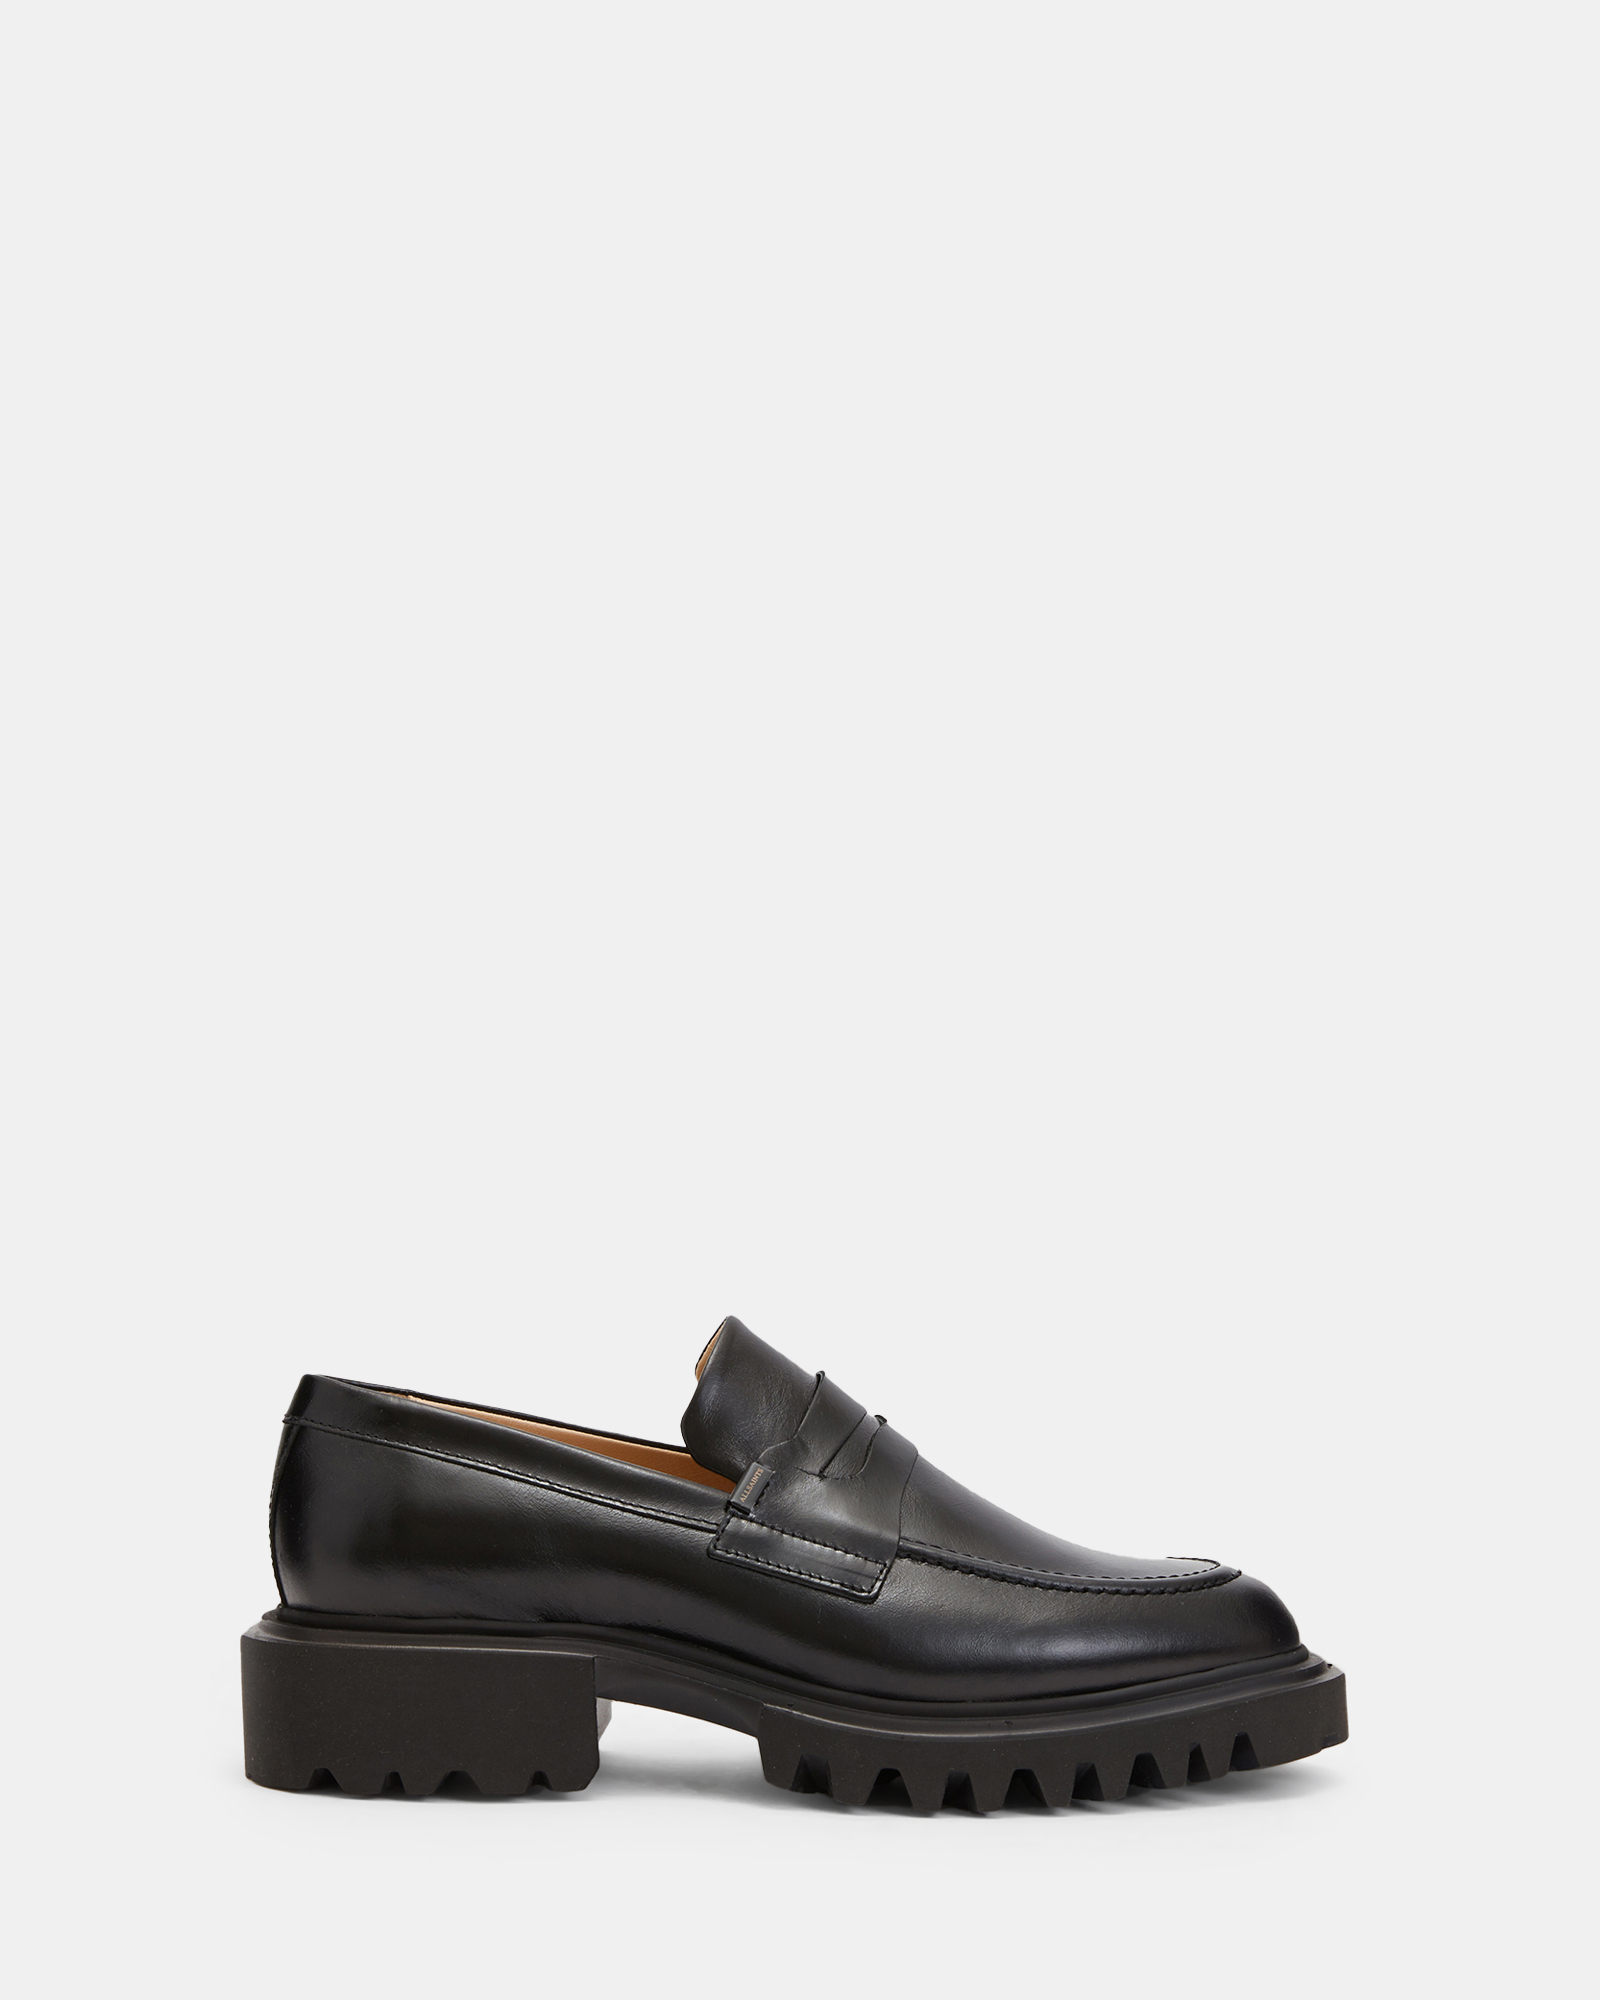 AllSaints Lola Slip On Shiny Leather Loafer Shoes,, Black